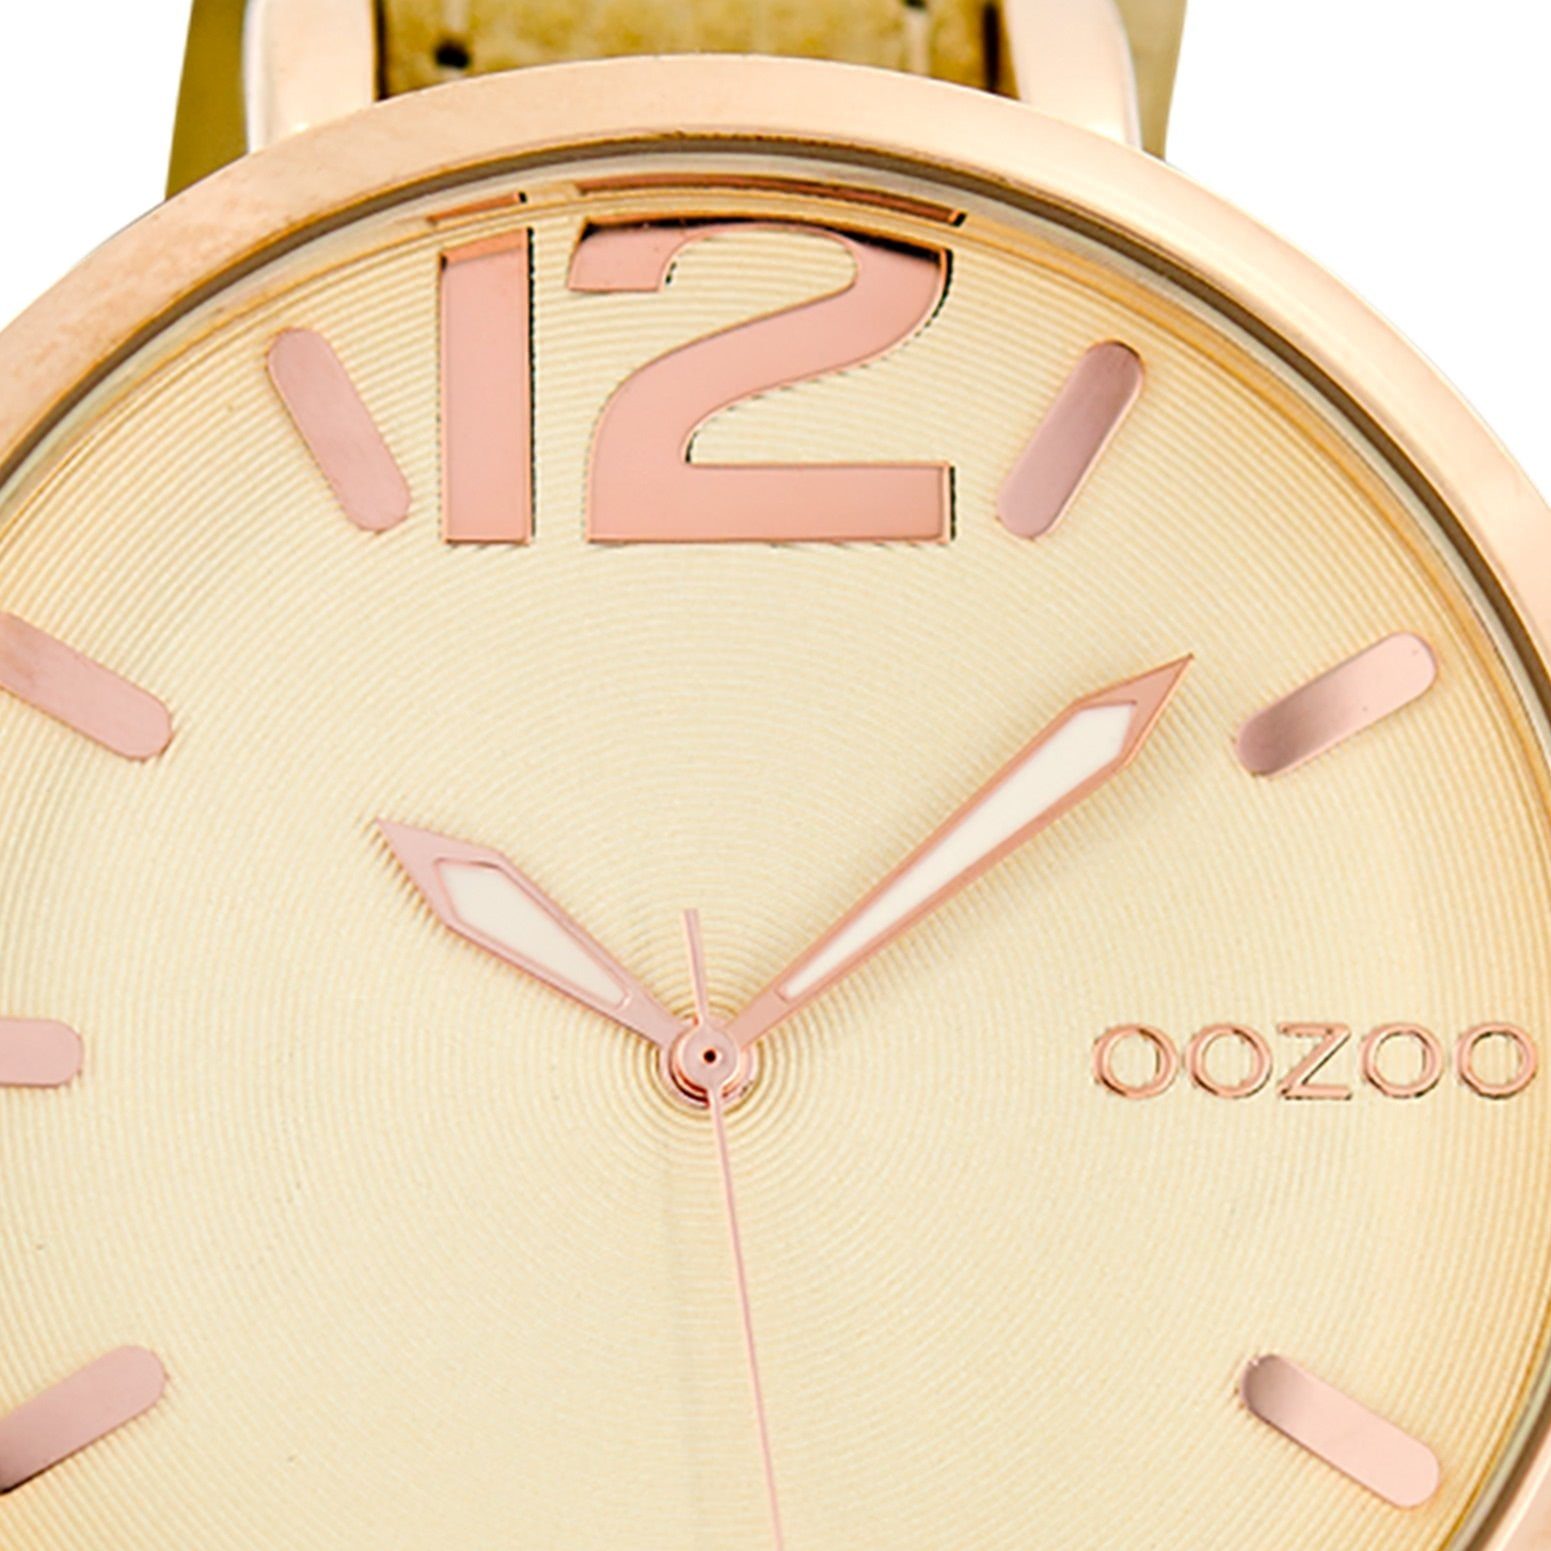 Fashion-Style Damen groß OOZOO Armbanduhr rund, Oozoo (ca. 45mm) rosegold, Lederarmband, Damenuhr Quarzuhr